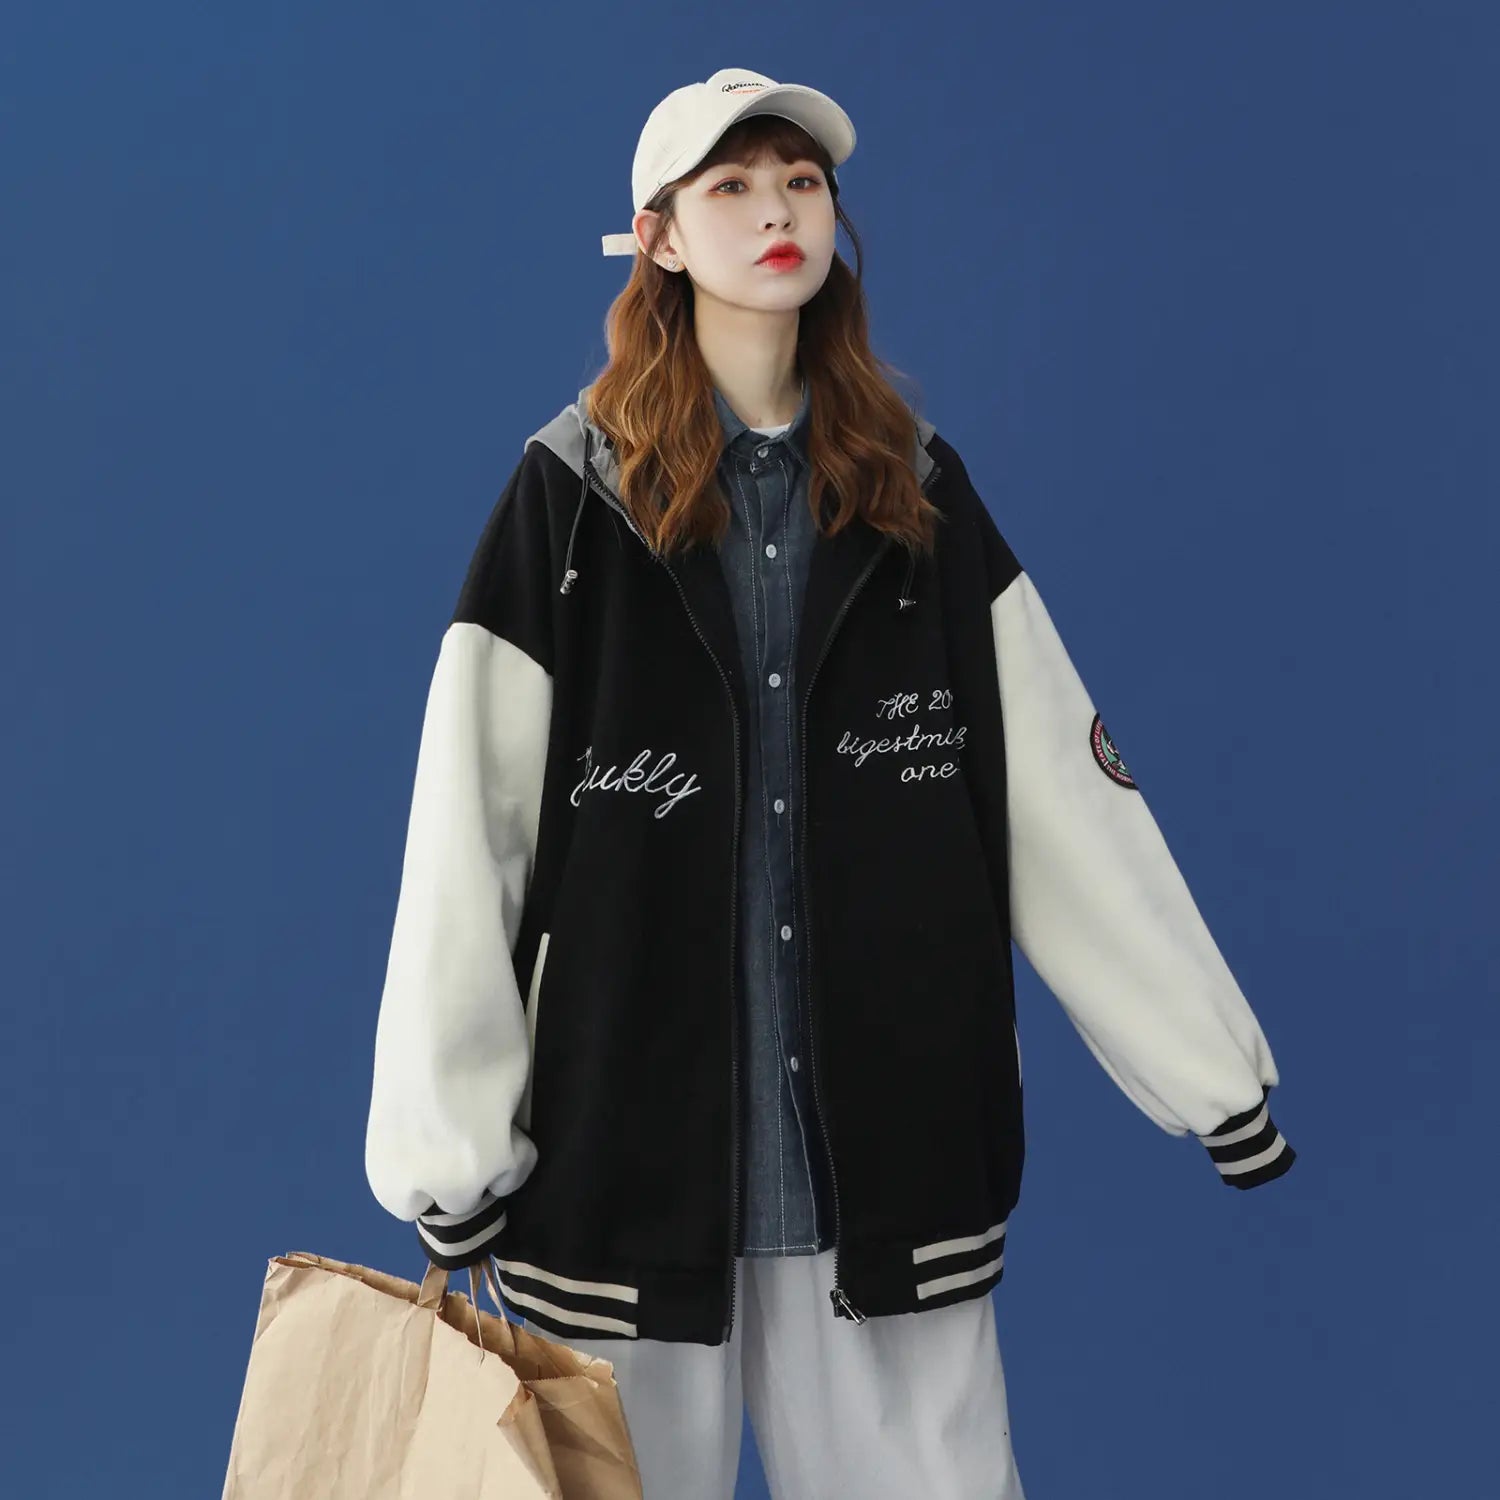 Lovemi - Jacket Women’s Spring And Autumn Wild Tide Brand